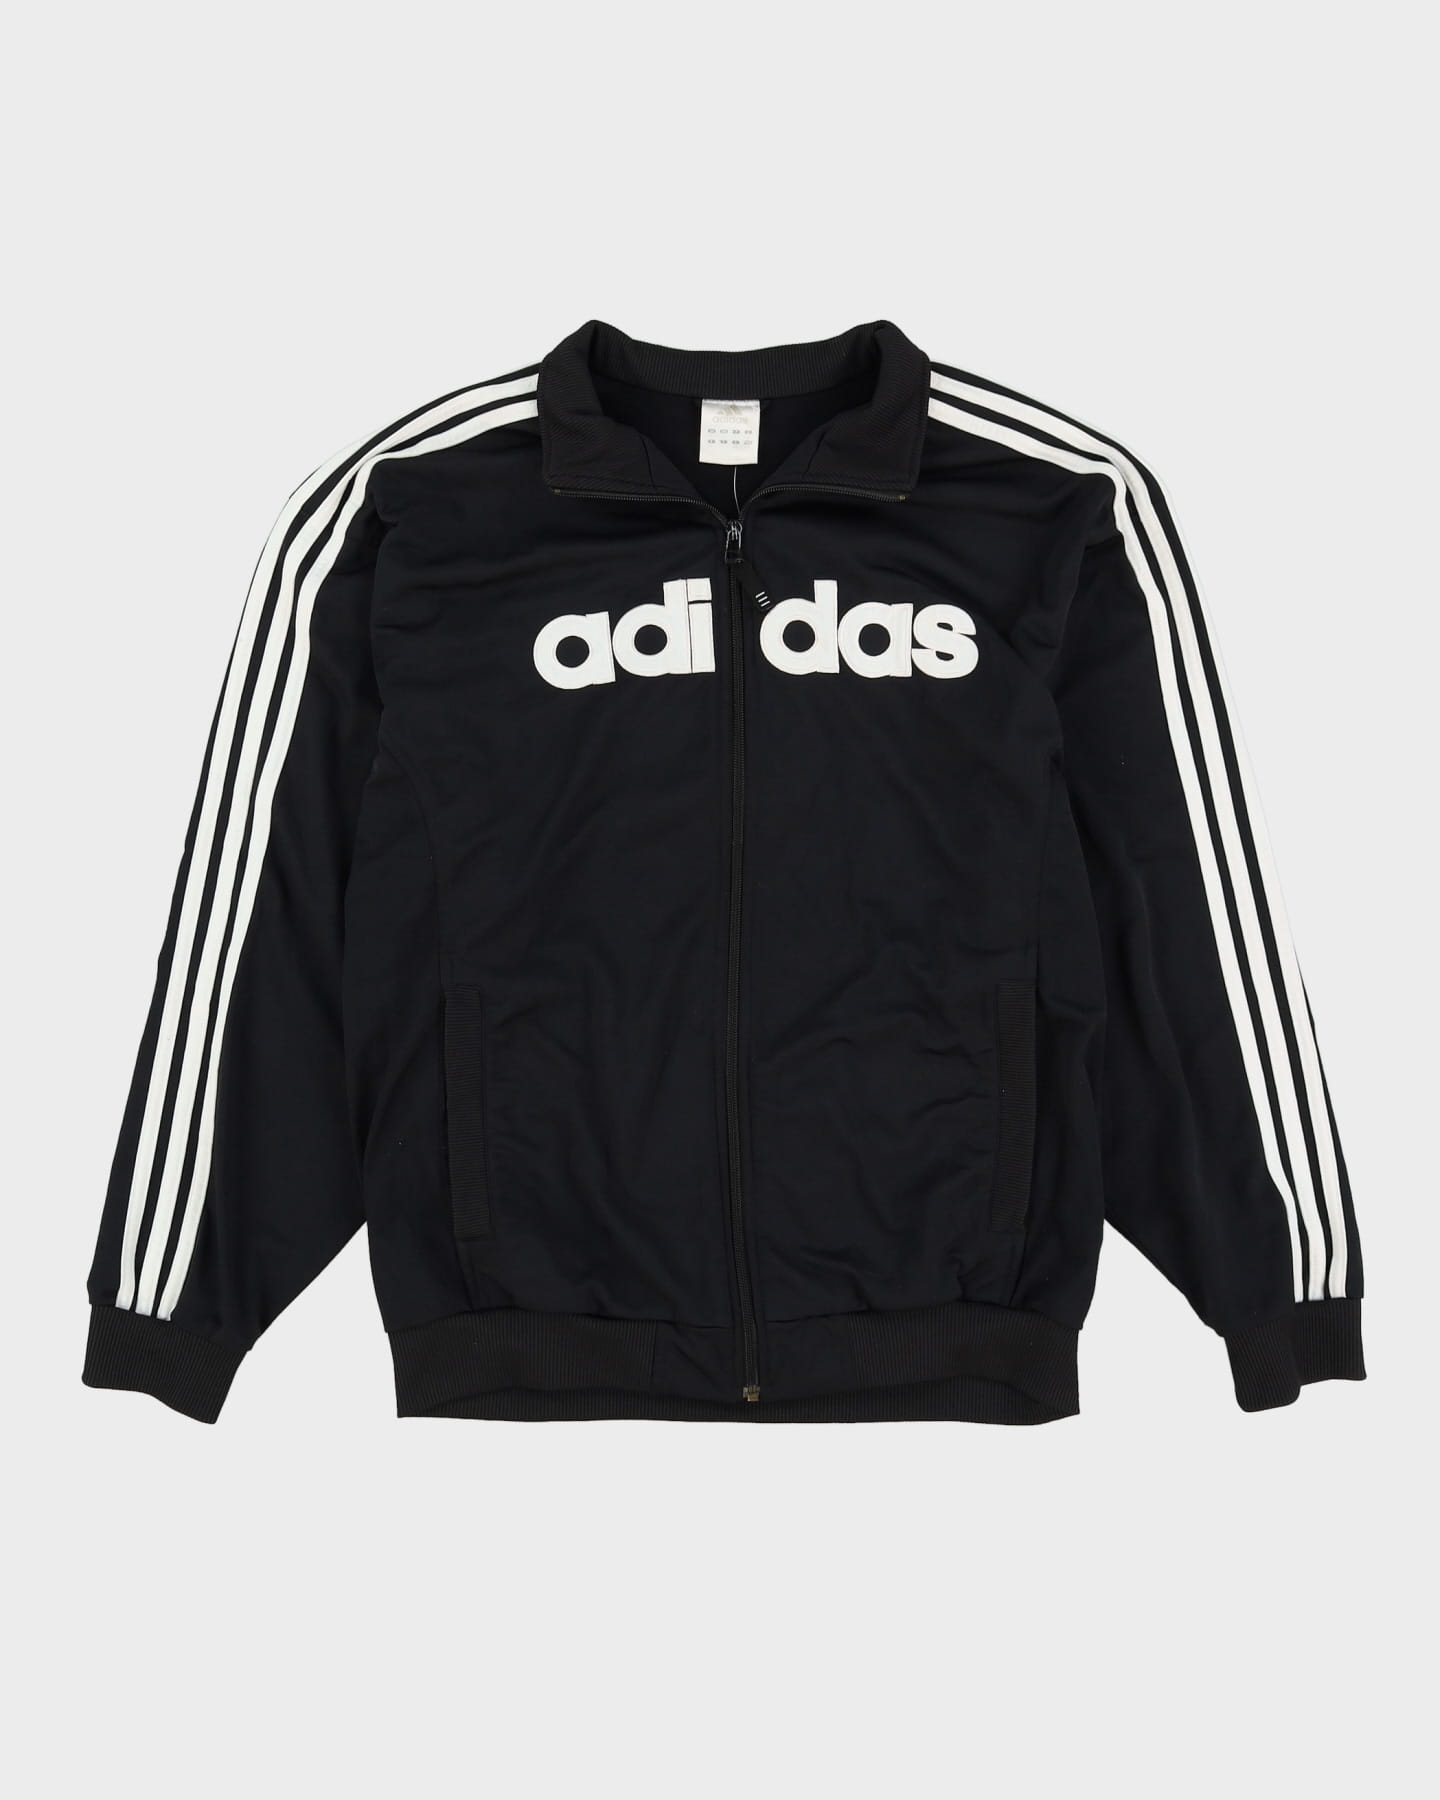 Adidas Black / White Track Jacket - L / XL